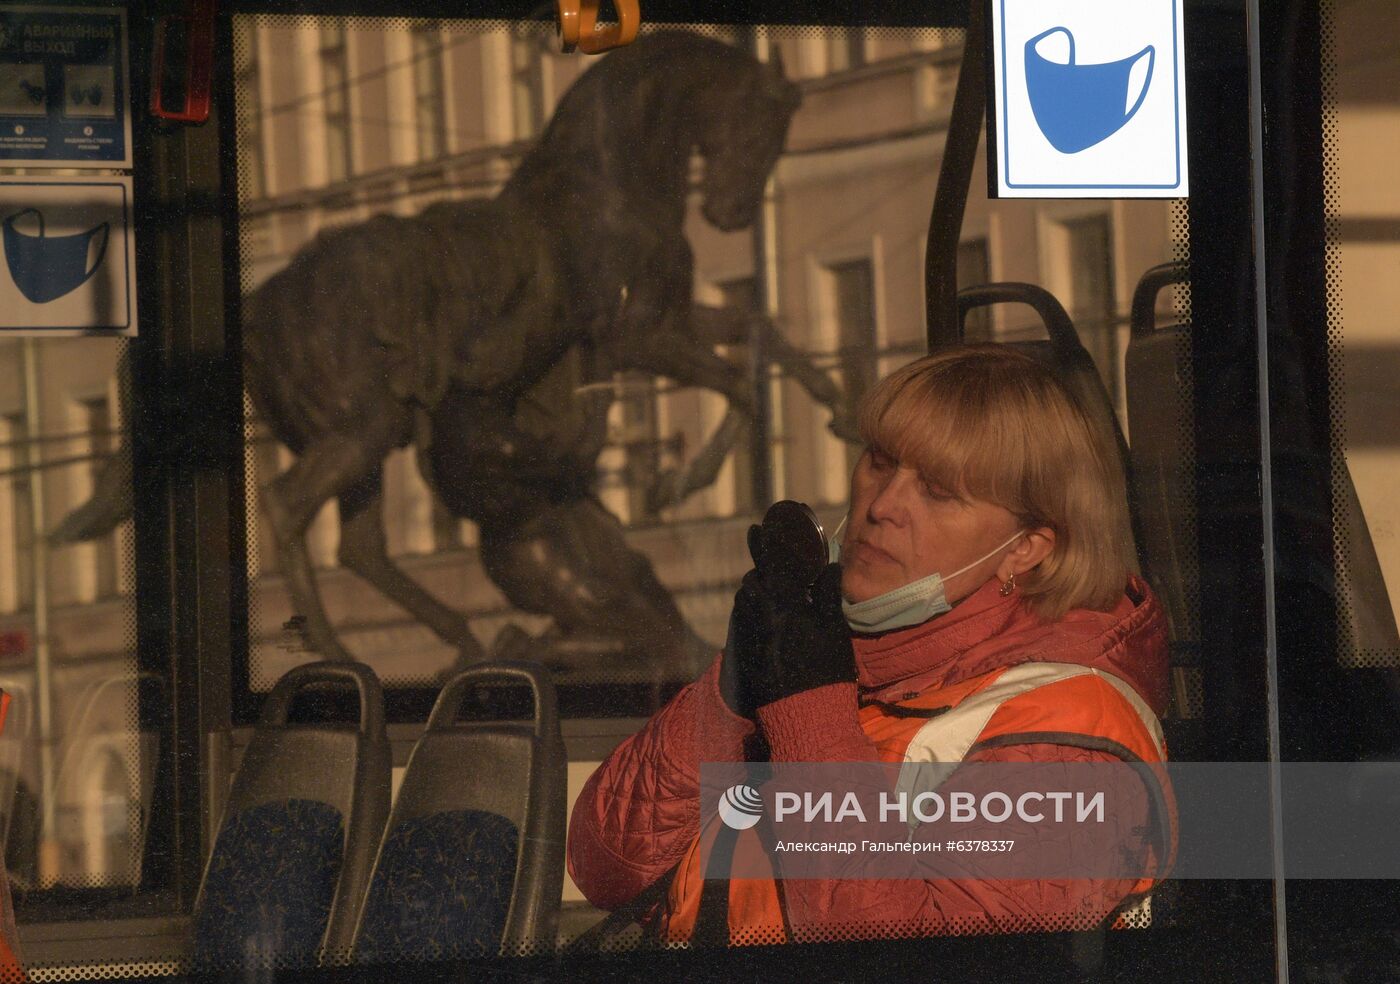 Ситуация в связи с коронавирусом в Санкт-Петербурге